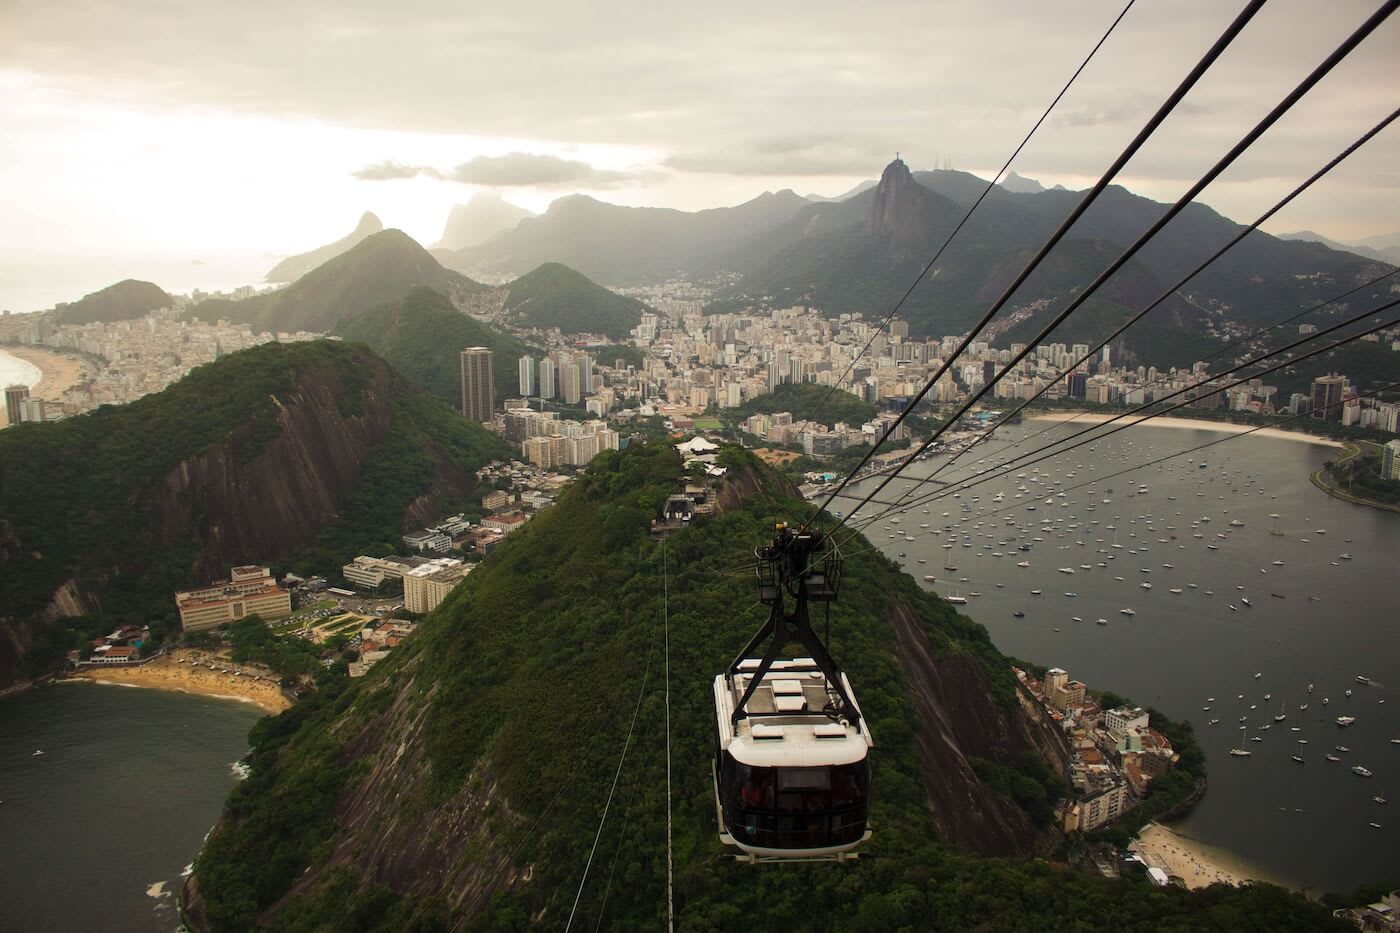 Rio de Janeiro and mountains from above